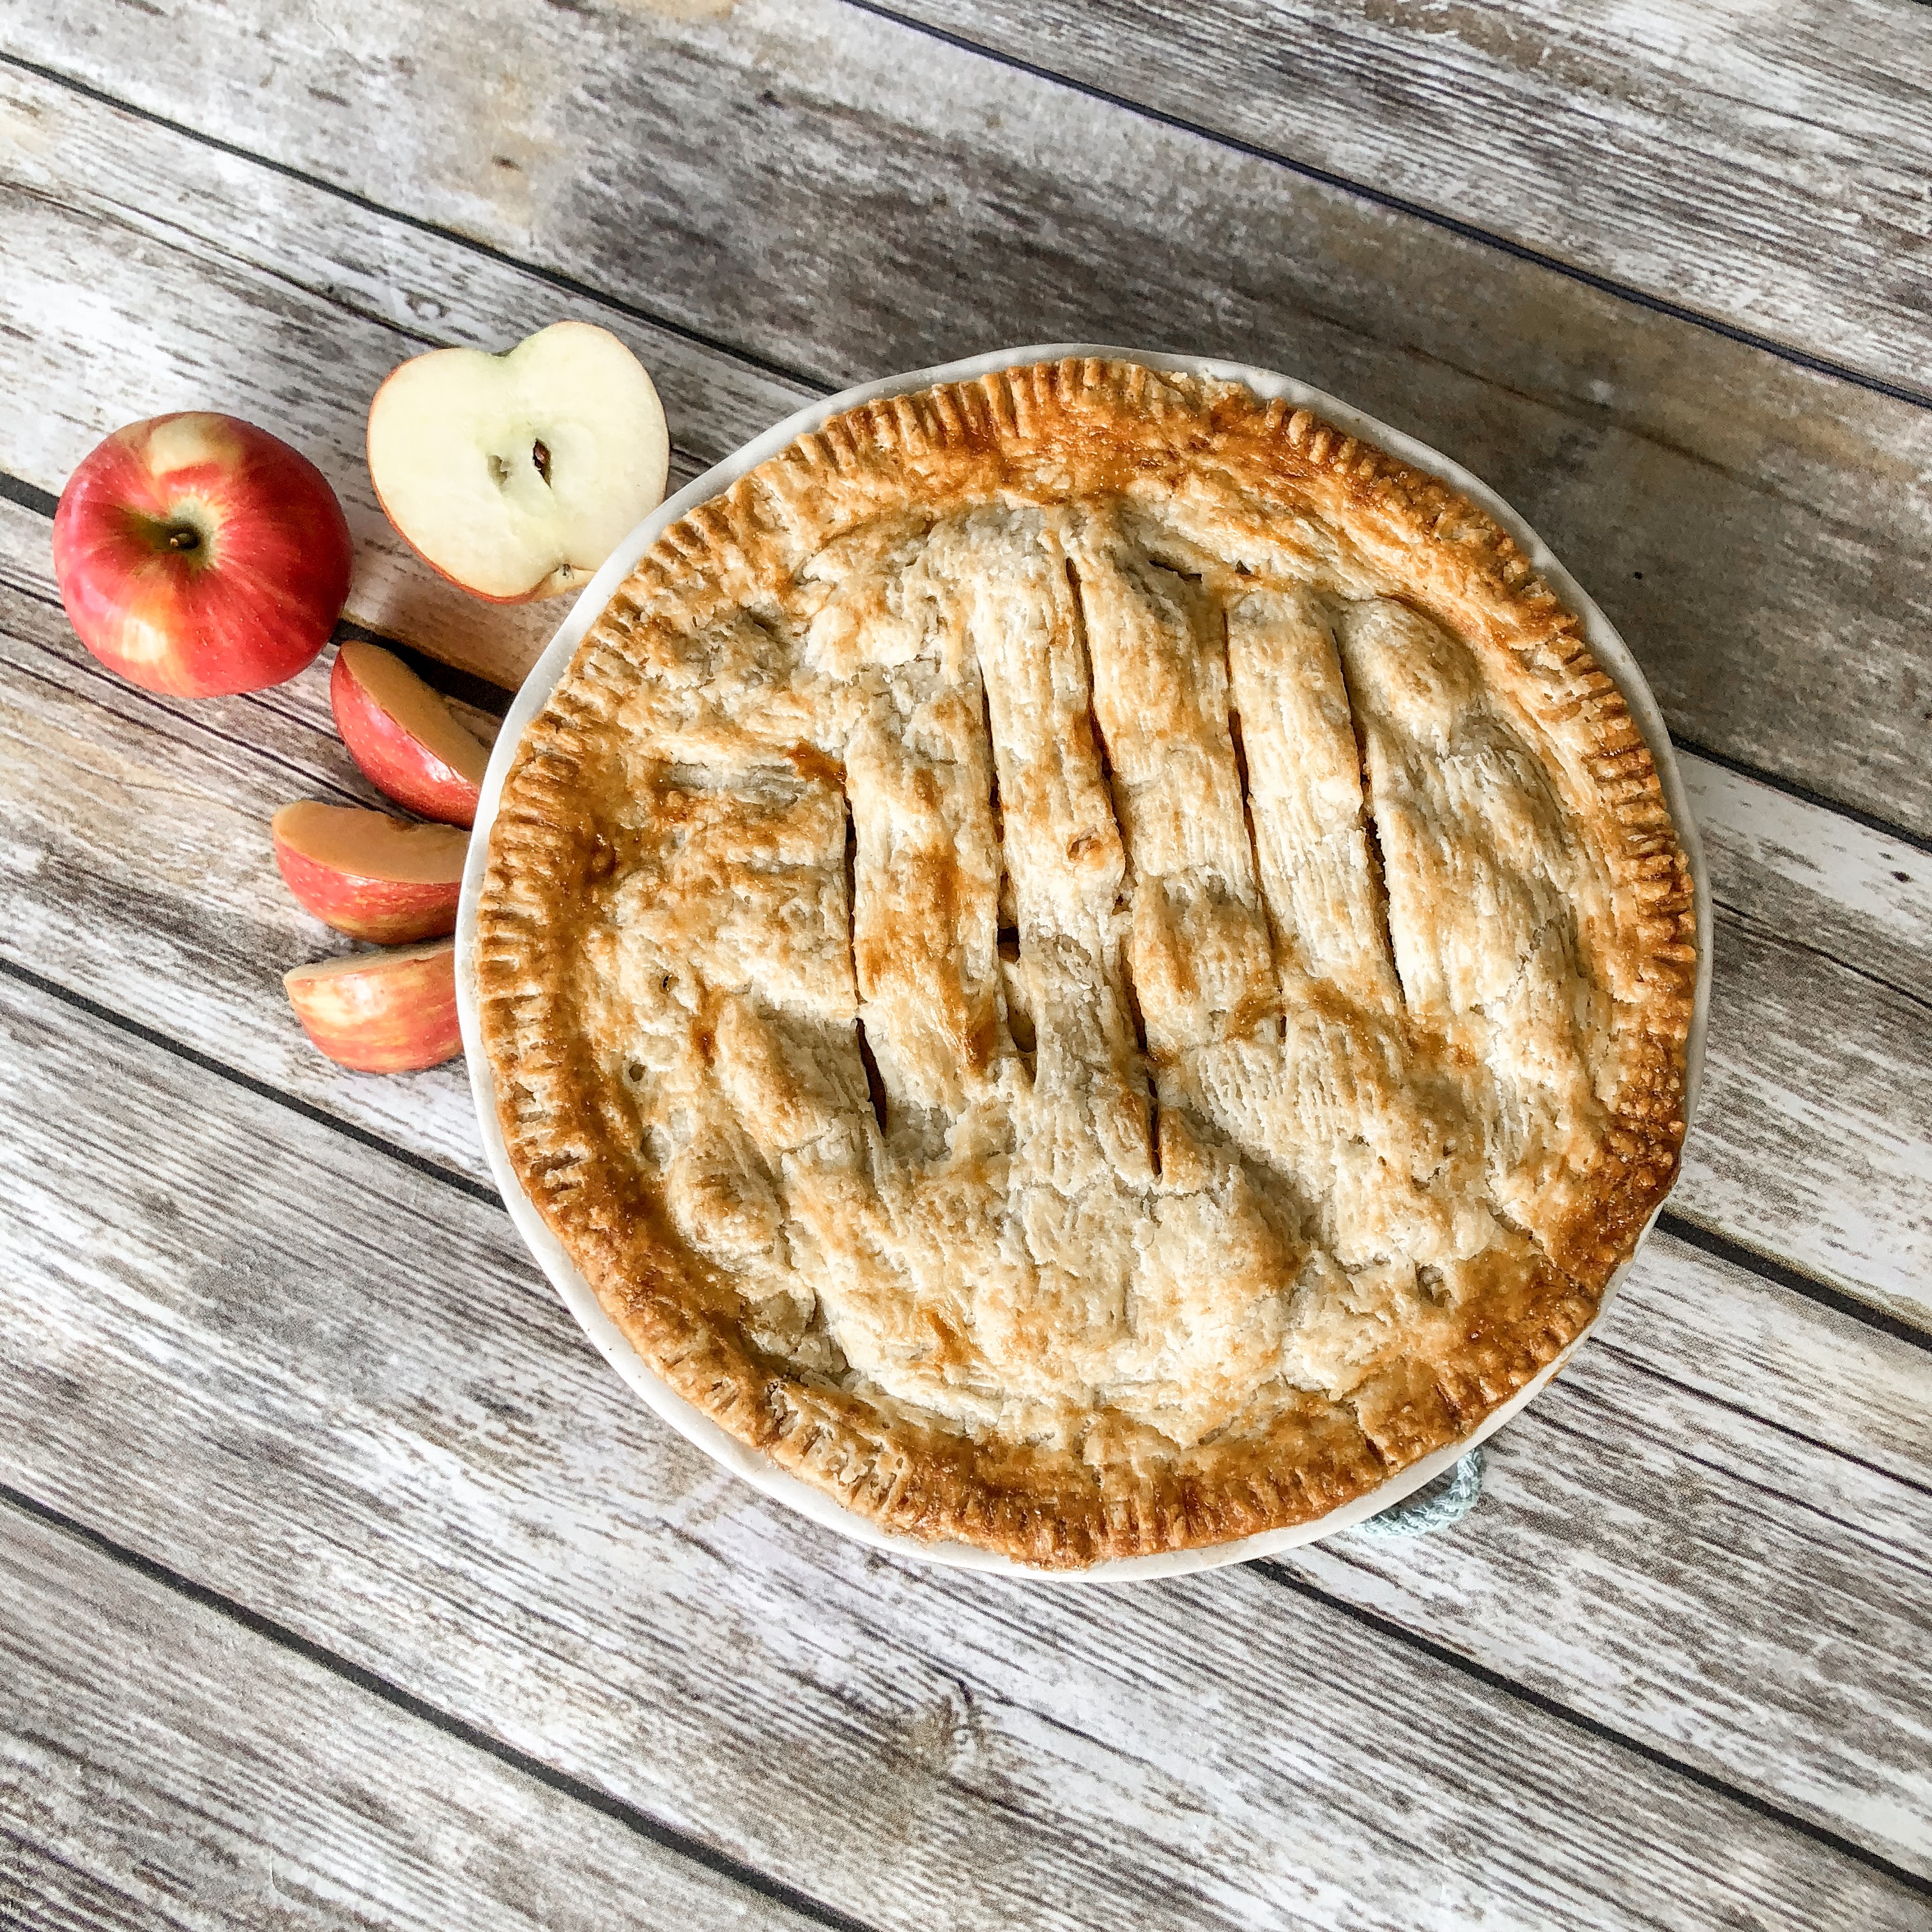 homemade apple pie, homemade crust, homemade filling, family recipe, secret recipe, kateschwanke, kate schwanke, food blogger, best desserts, apple pie recipe, apple pie